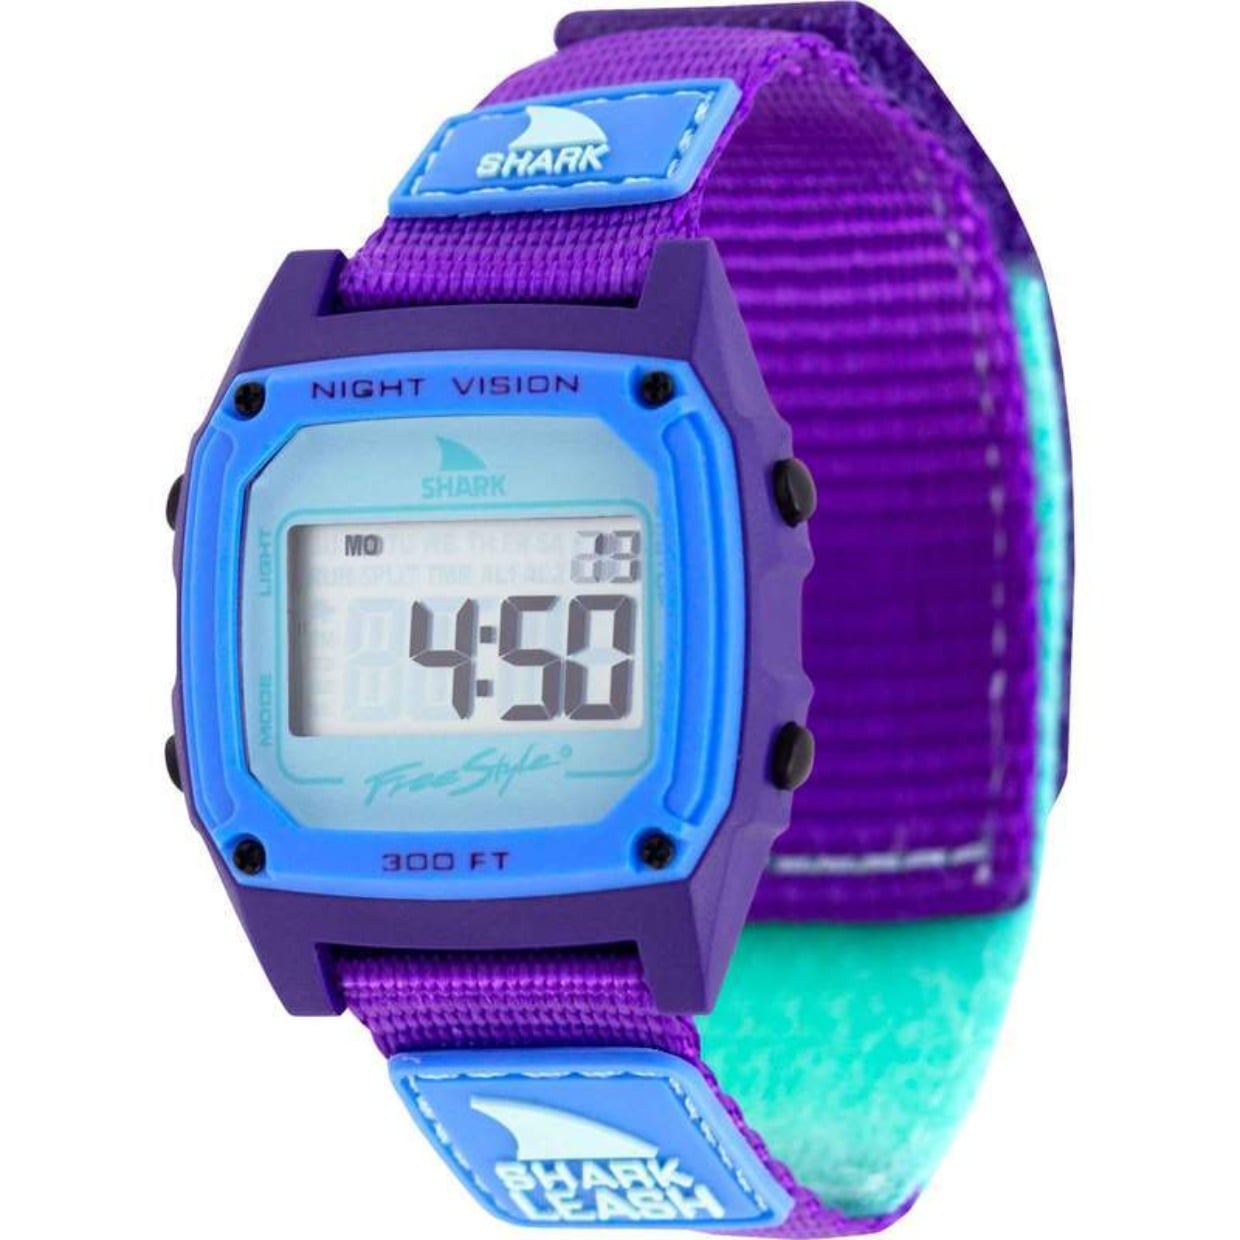 Freestyle Watches Grape Purple Freestyle Classic Clip Shark Watch (Grape Soda)